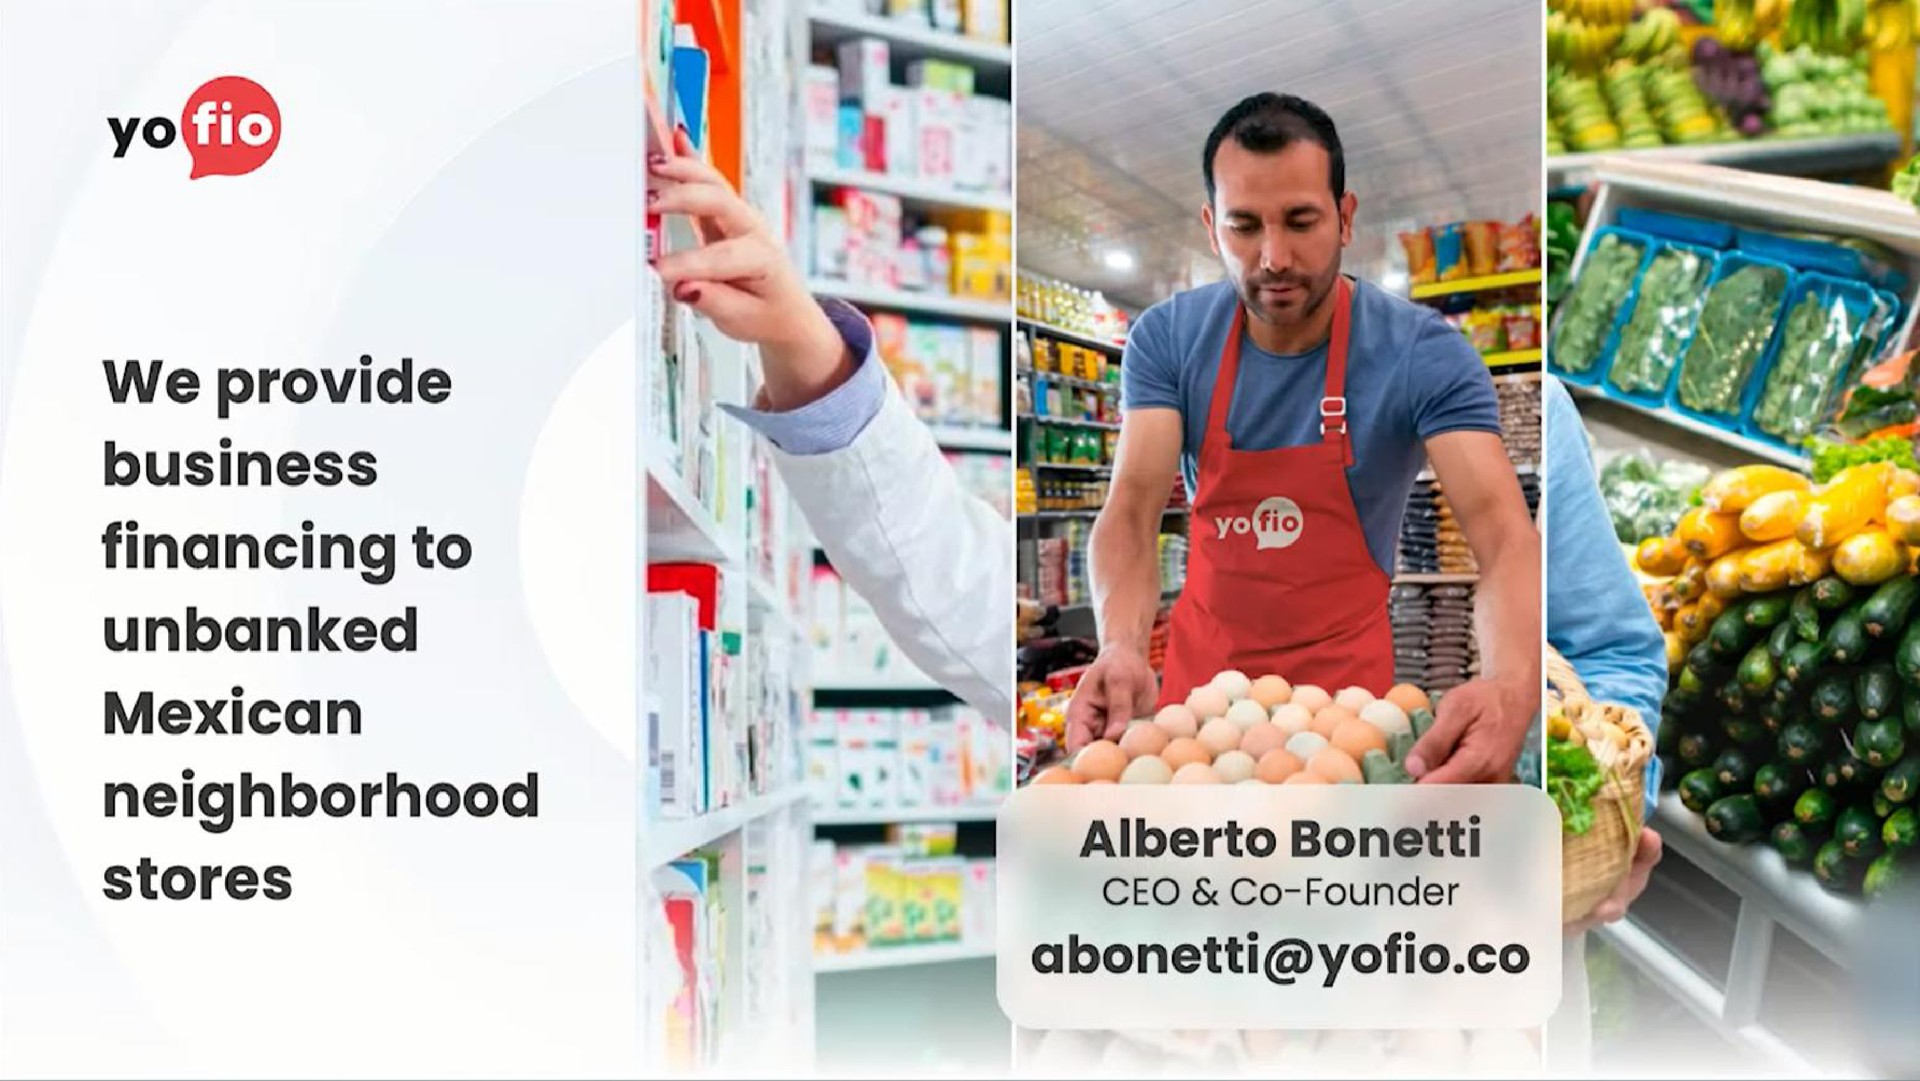 we provide business financing to unbanked neighborhood stores | Yofio